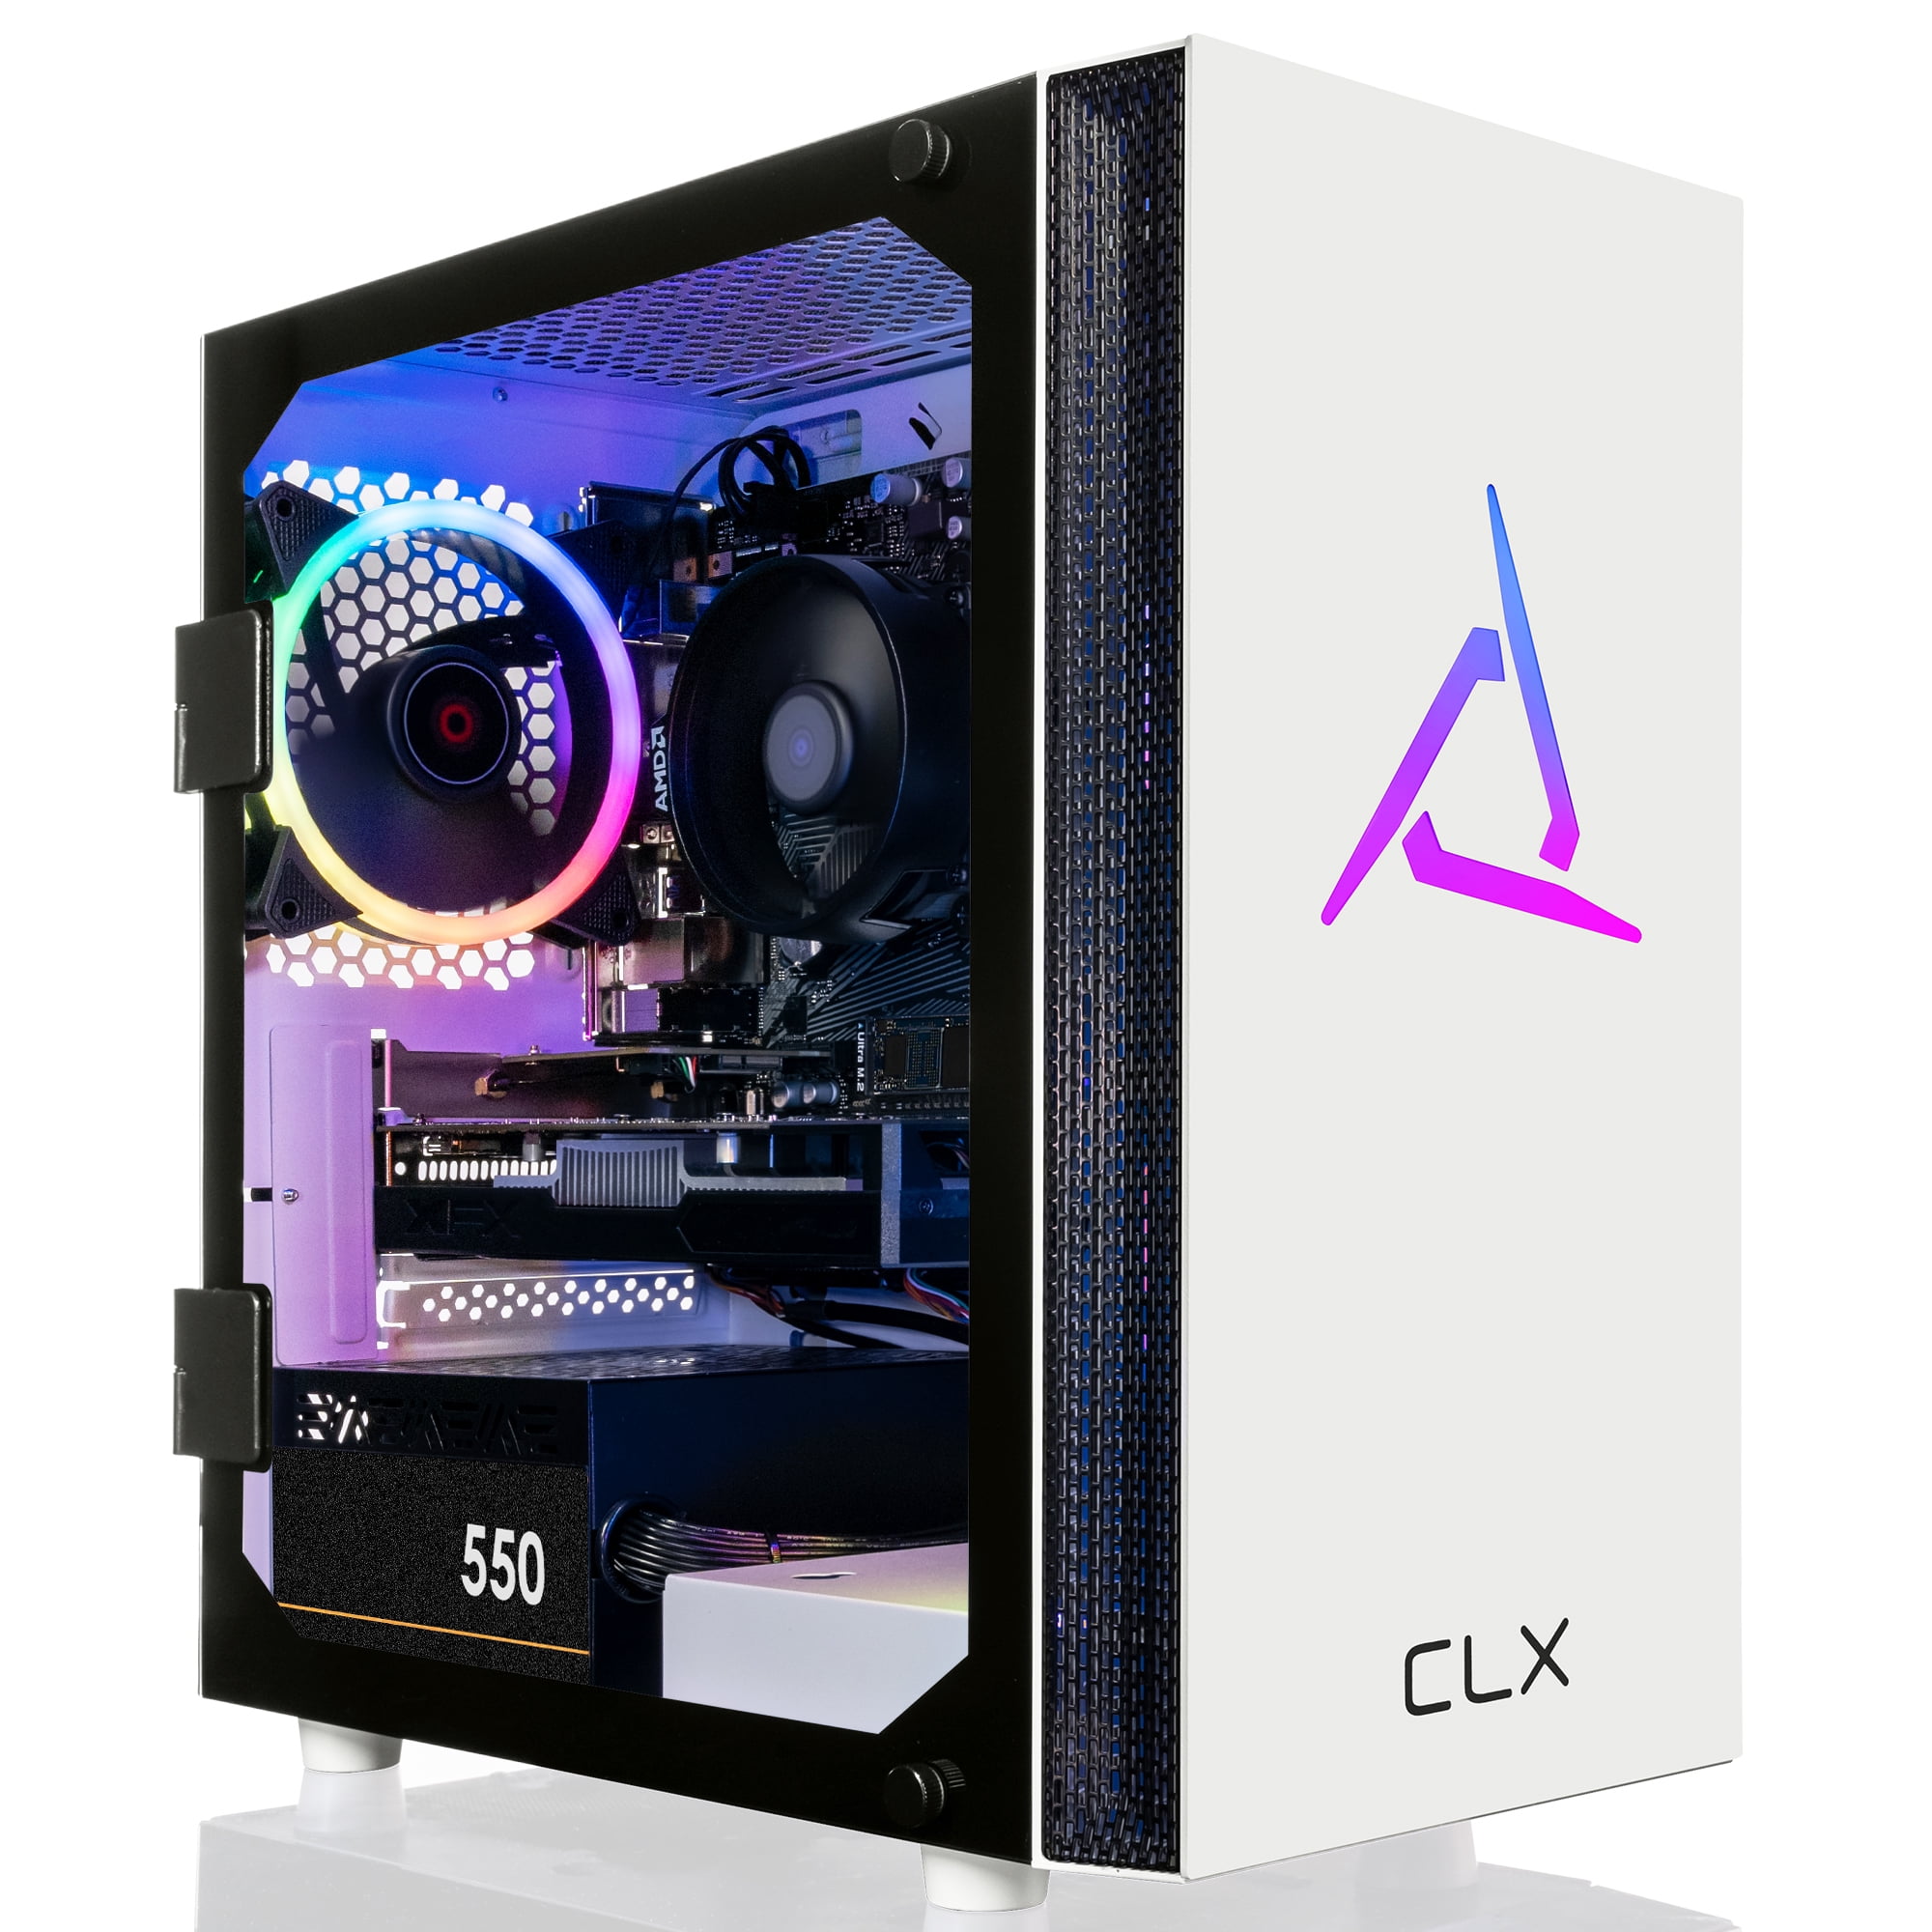 CLX Set Gaming Desktop AMD Ryzen 5600 3.5GHz 6-Core Processor, 16GB DDR 